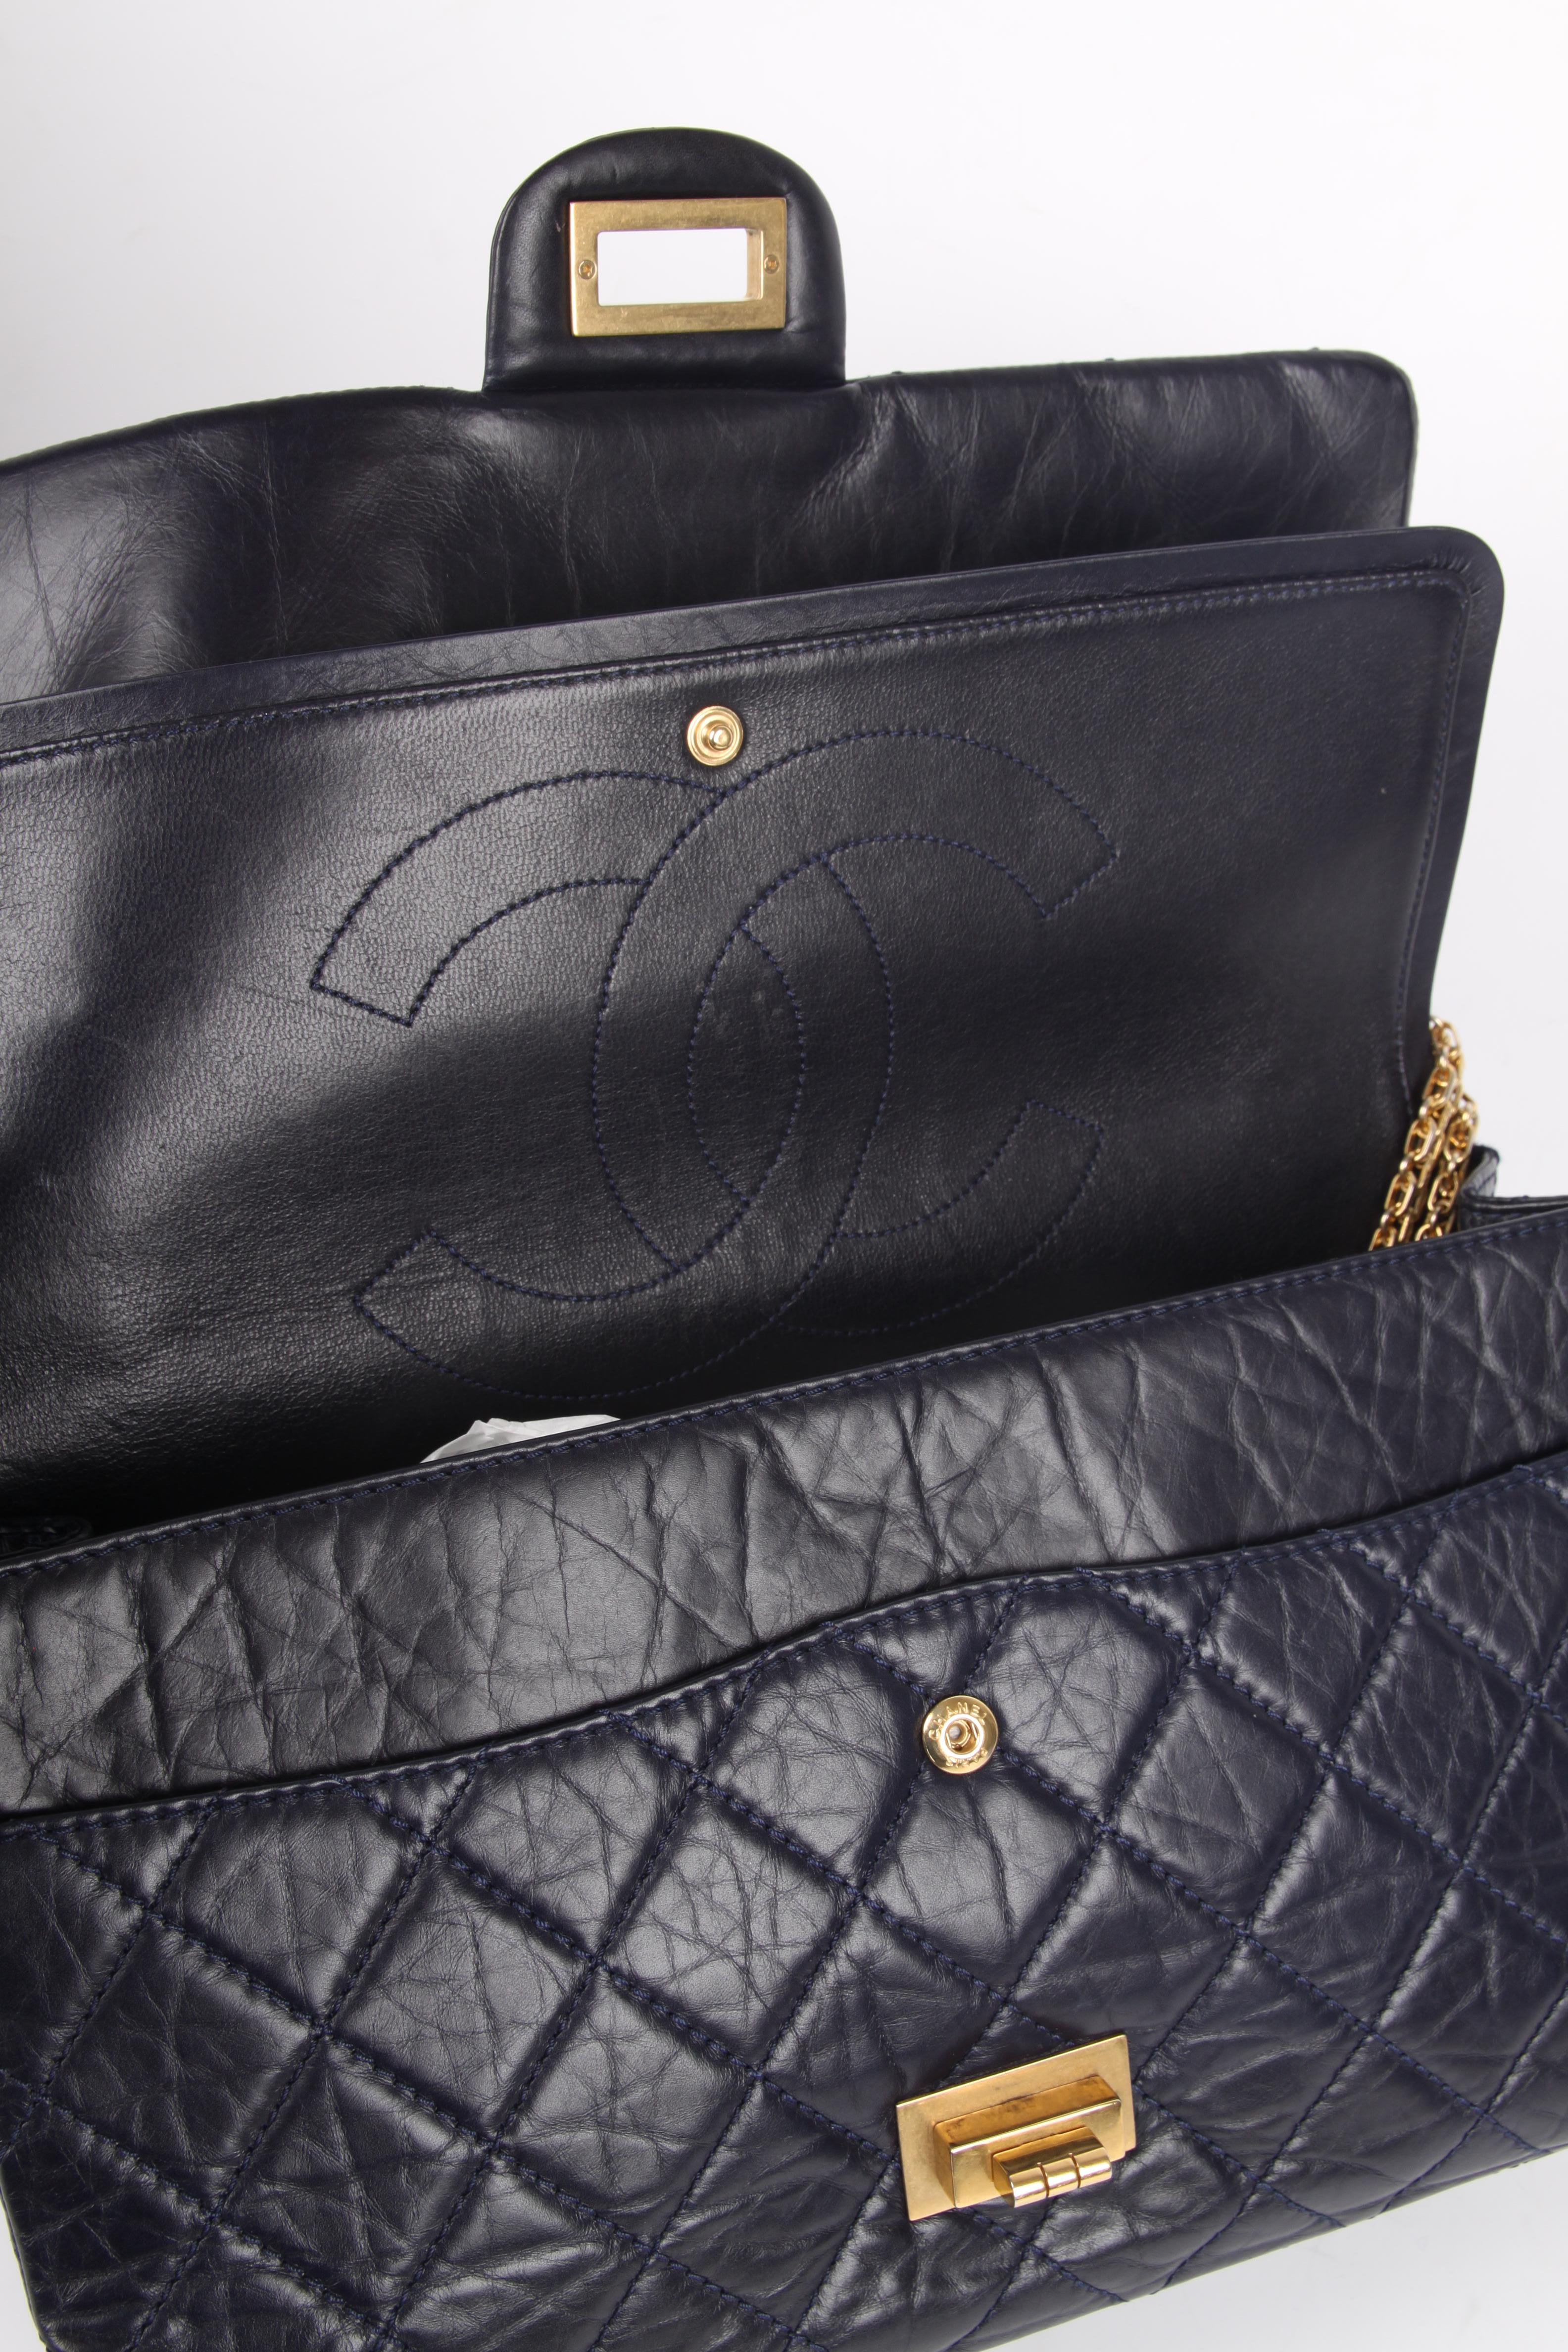 Chanel Reissue 2.55 Timeles Double Flap Bag 227 - dark blue 3